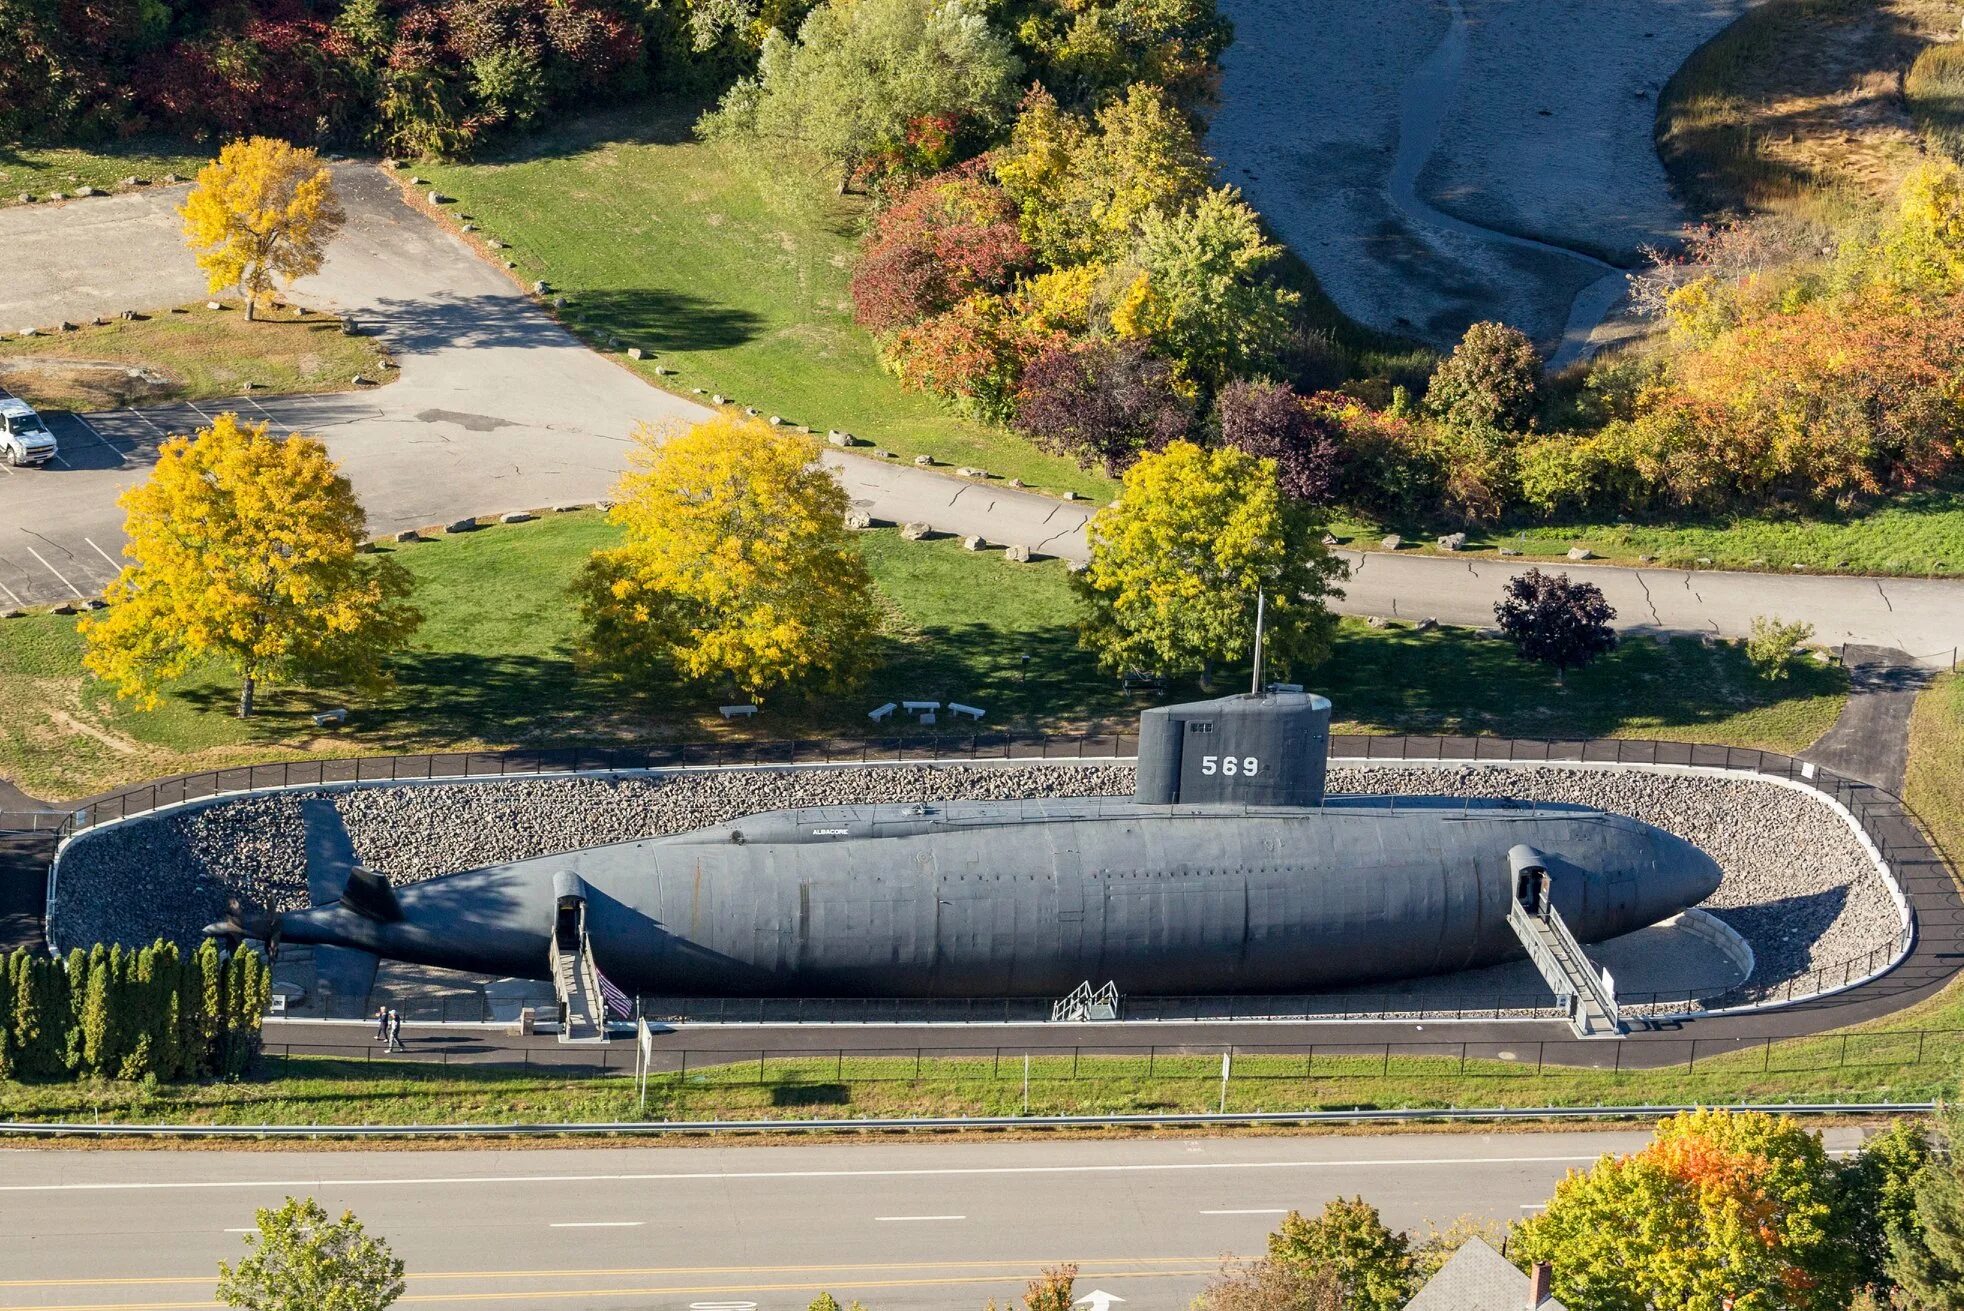 Музей пл. Подводная лодка Альбакор. Поселок ла Манш подводная лодка. Музей пл Albacore. USS Albacore (AGSS-569).